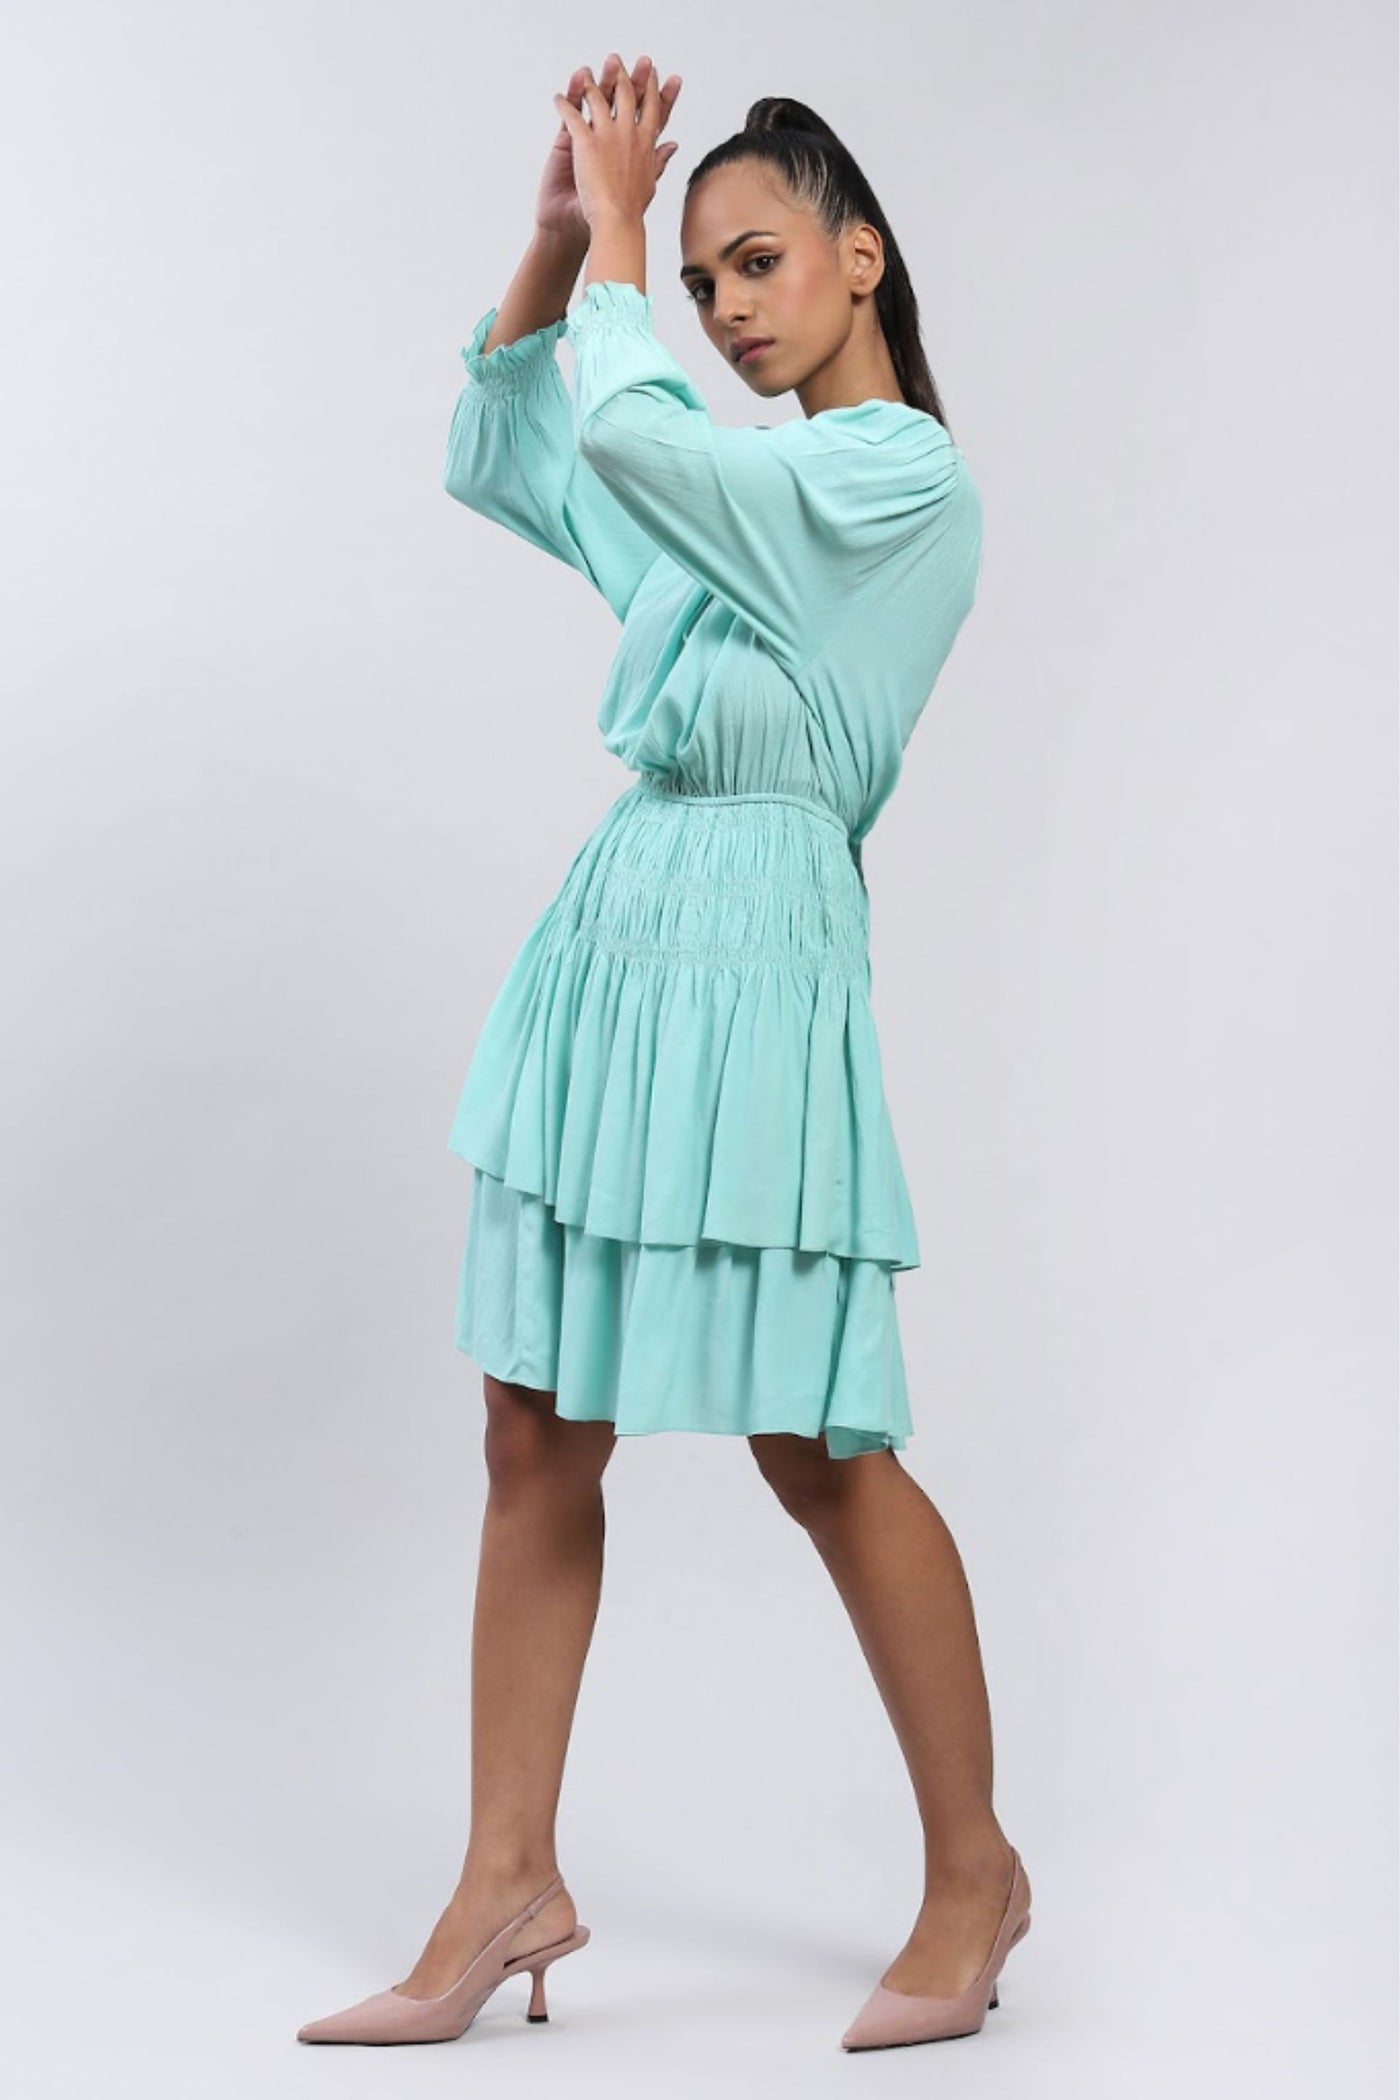 Label Ritu Kumar Mint Short Dress with Smocking Indian designer wear online shopping melange singapore